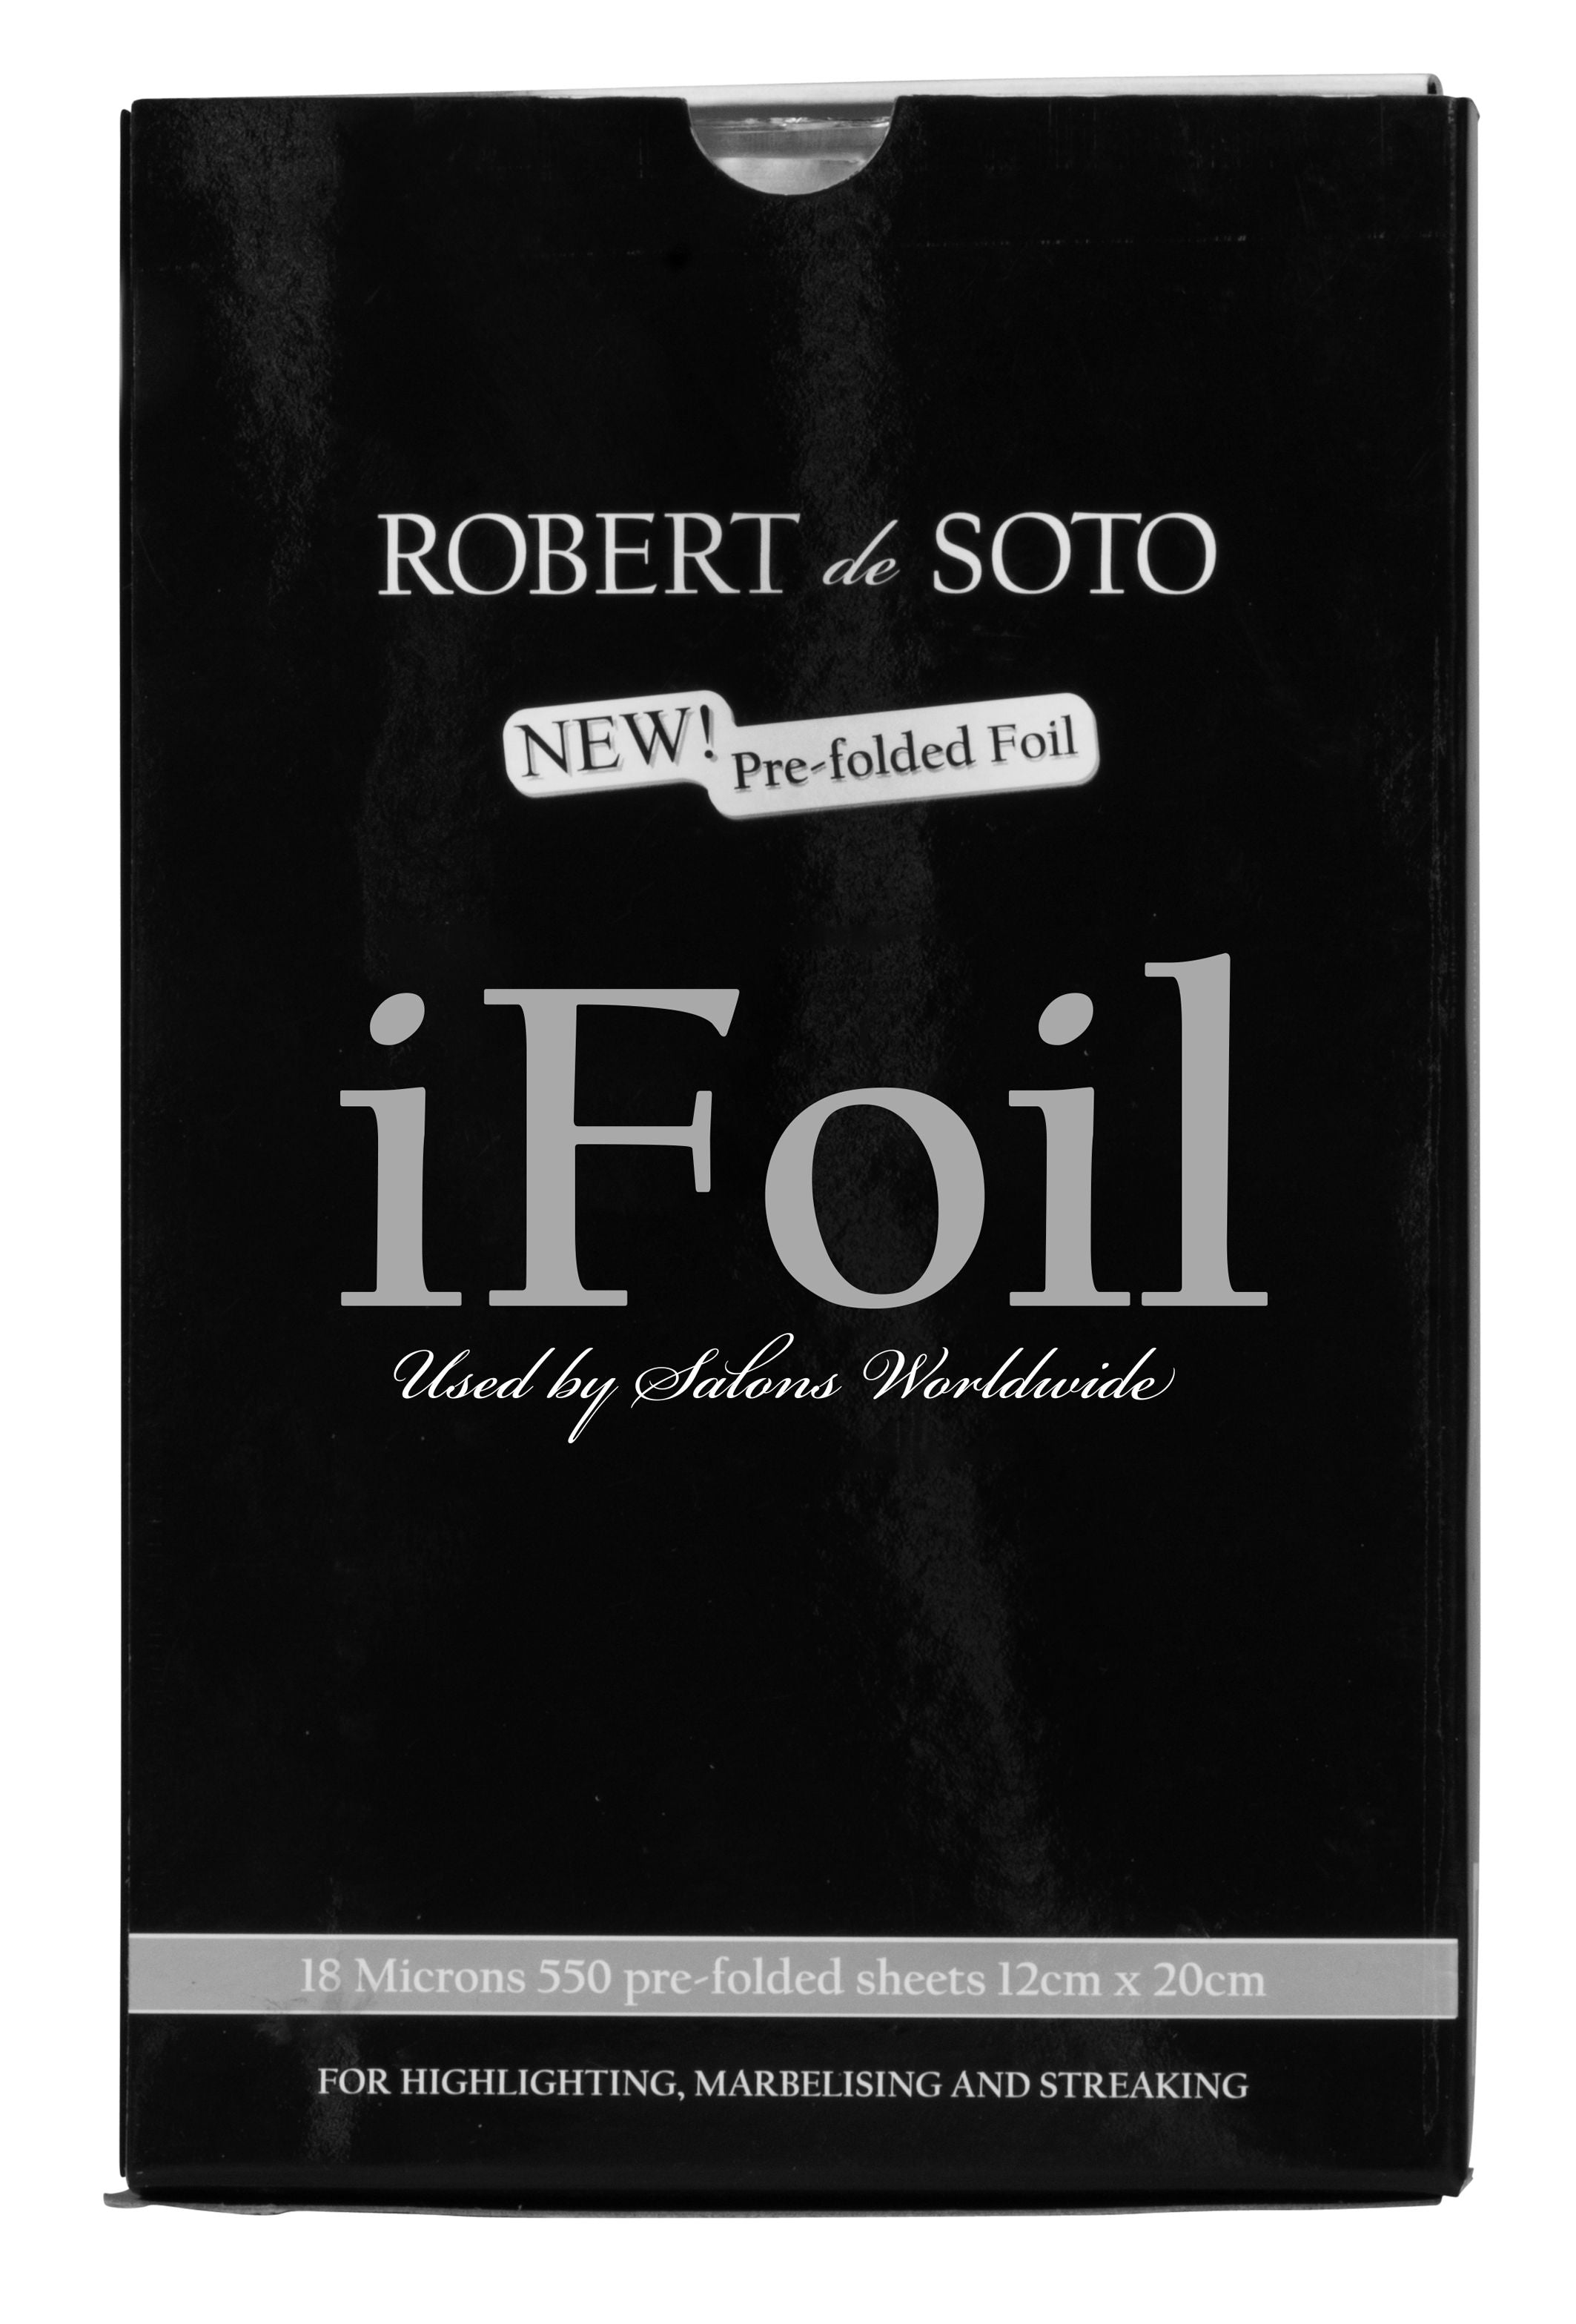 Robert DeSoto iFoil 18 Micron Pre Cut Foil 550 Sheets 120 x 200mm - Silver